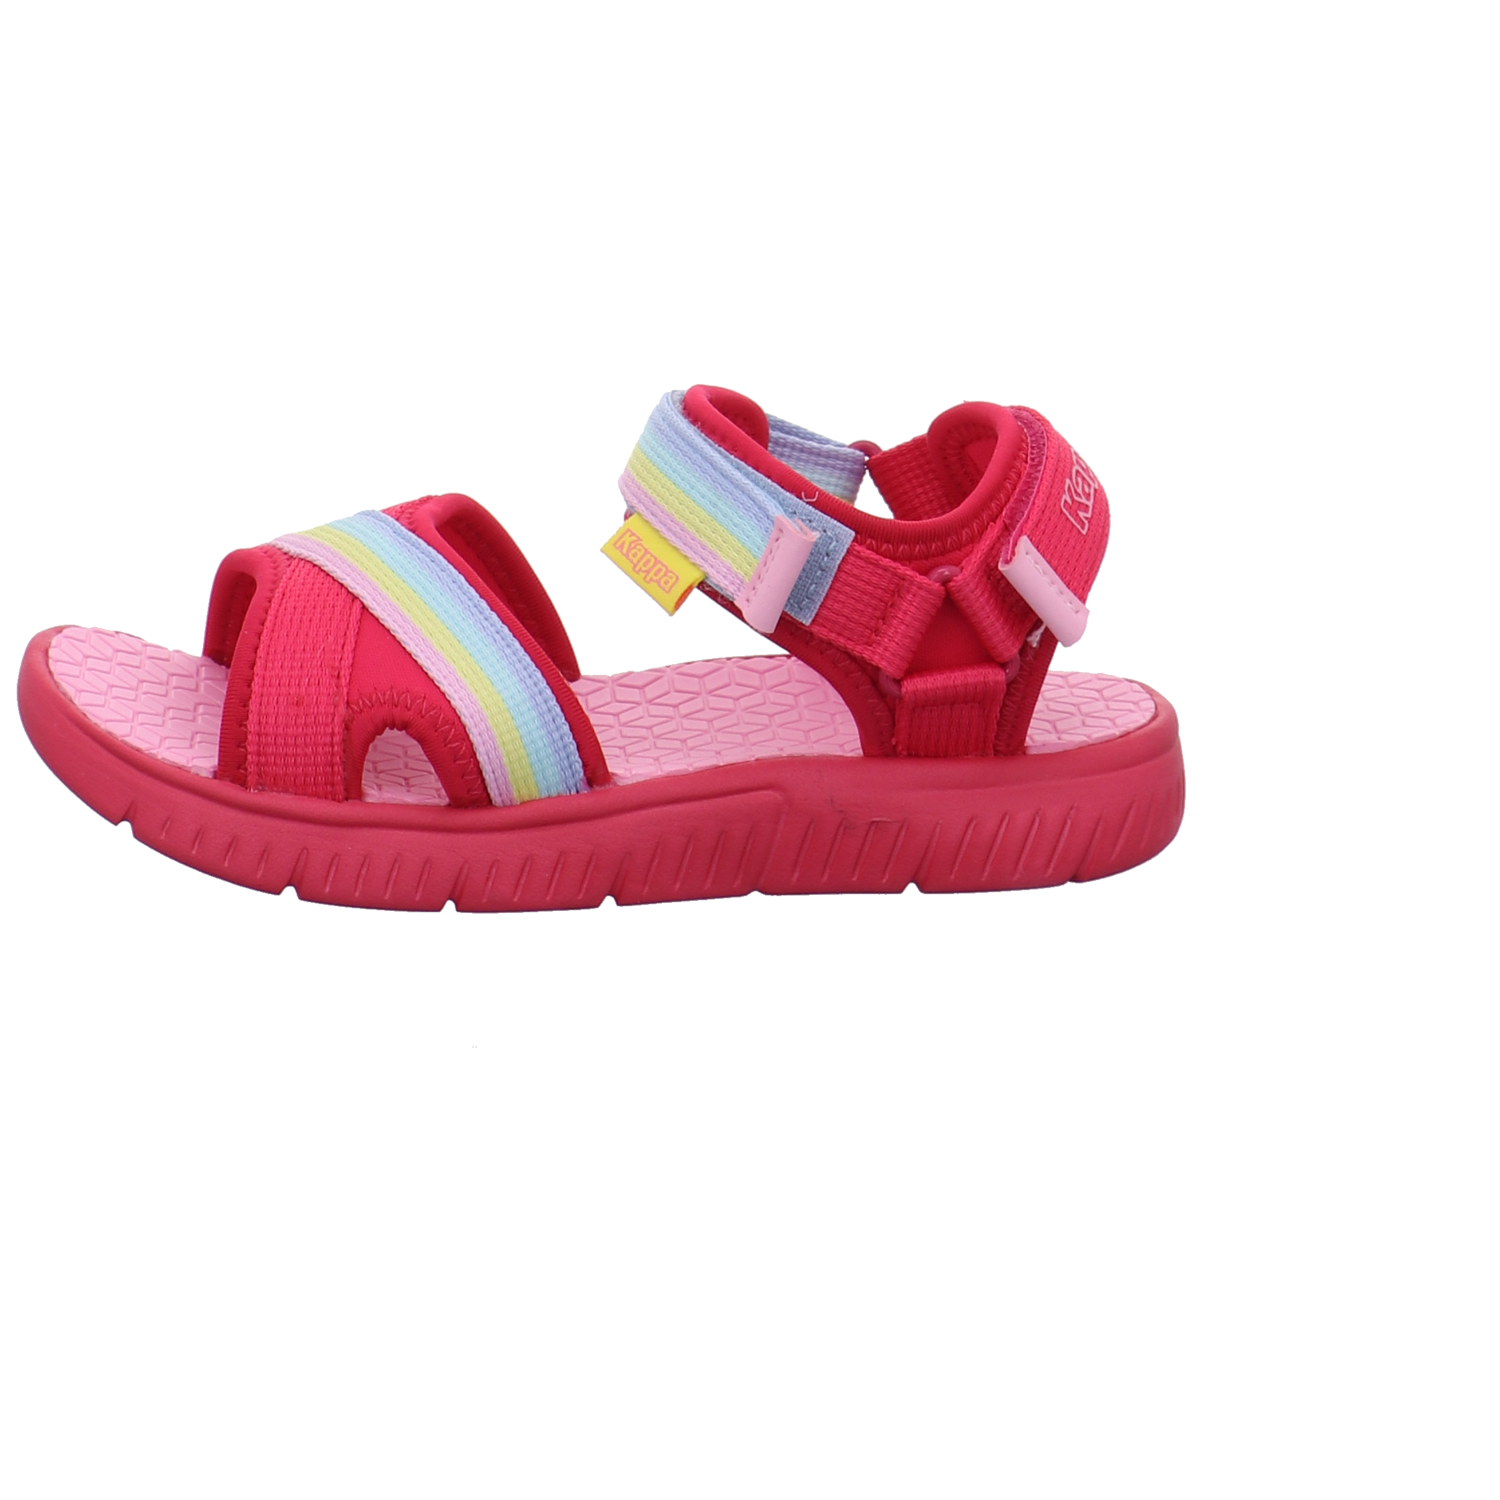 Kappa Offene Schuhe pink Bild1